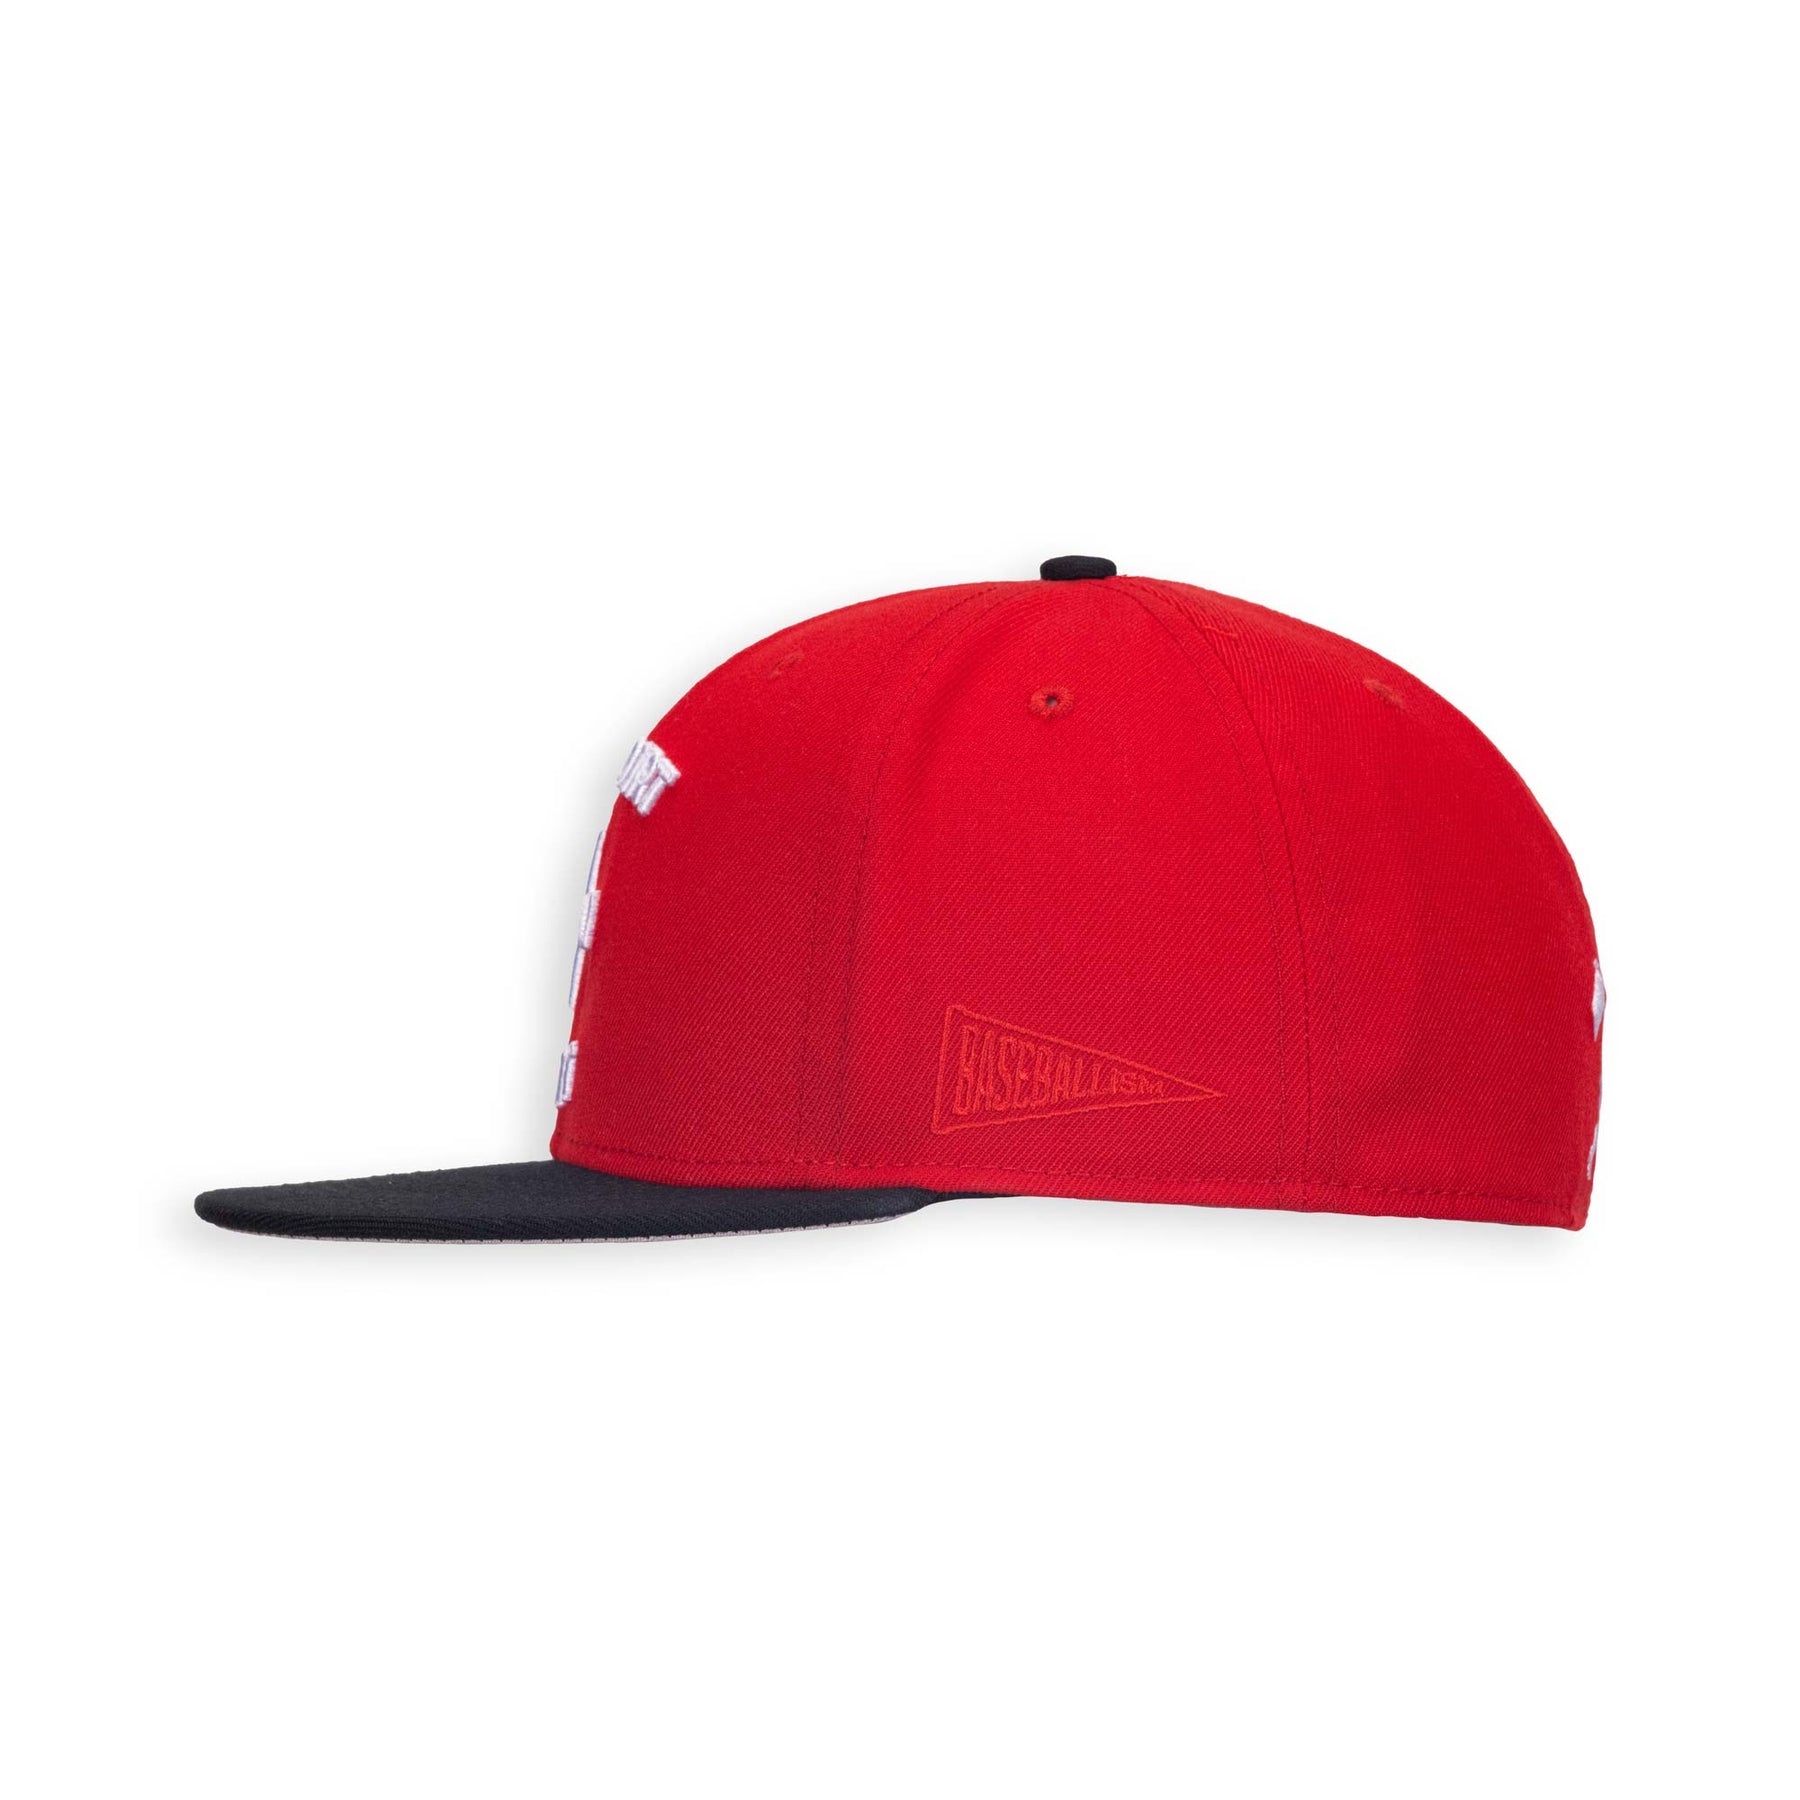 Major League Cap | Baseballism x Major League Collection | Baseball Caps